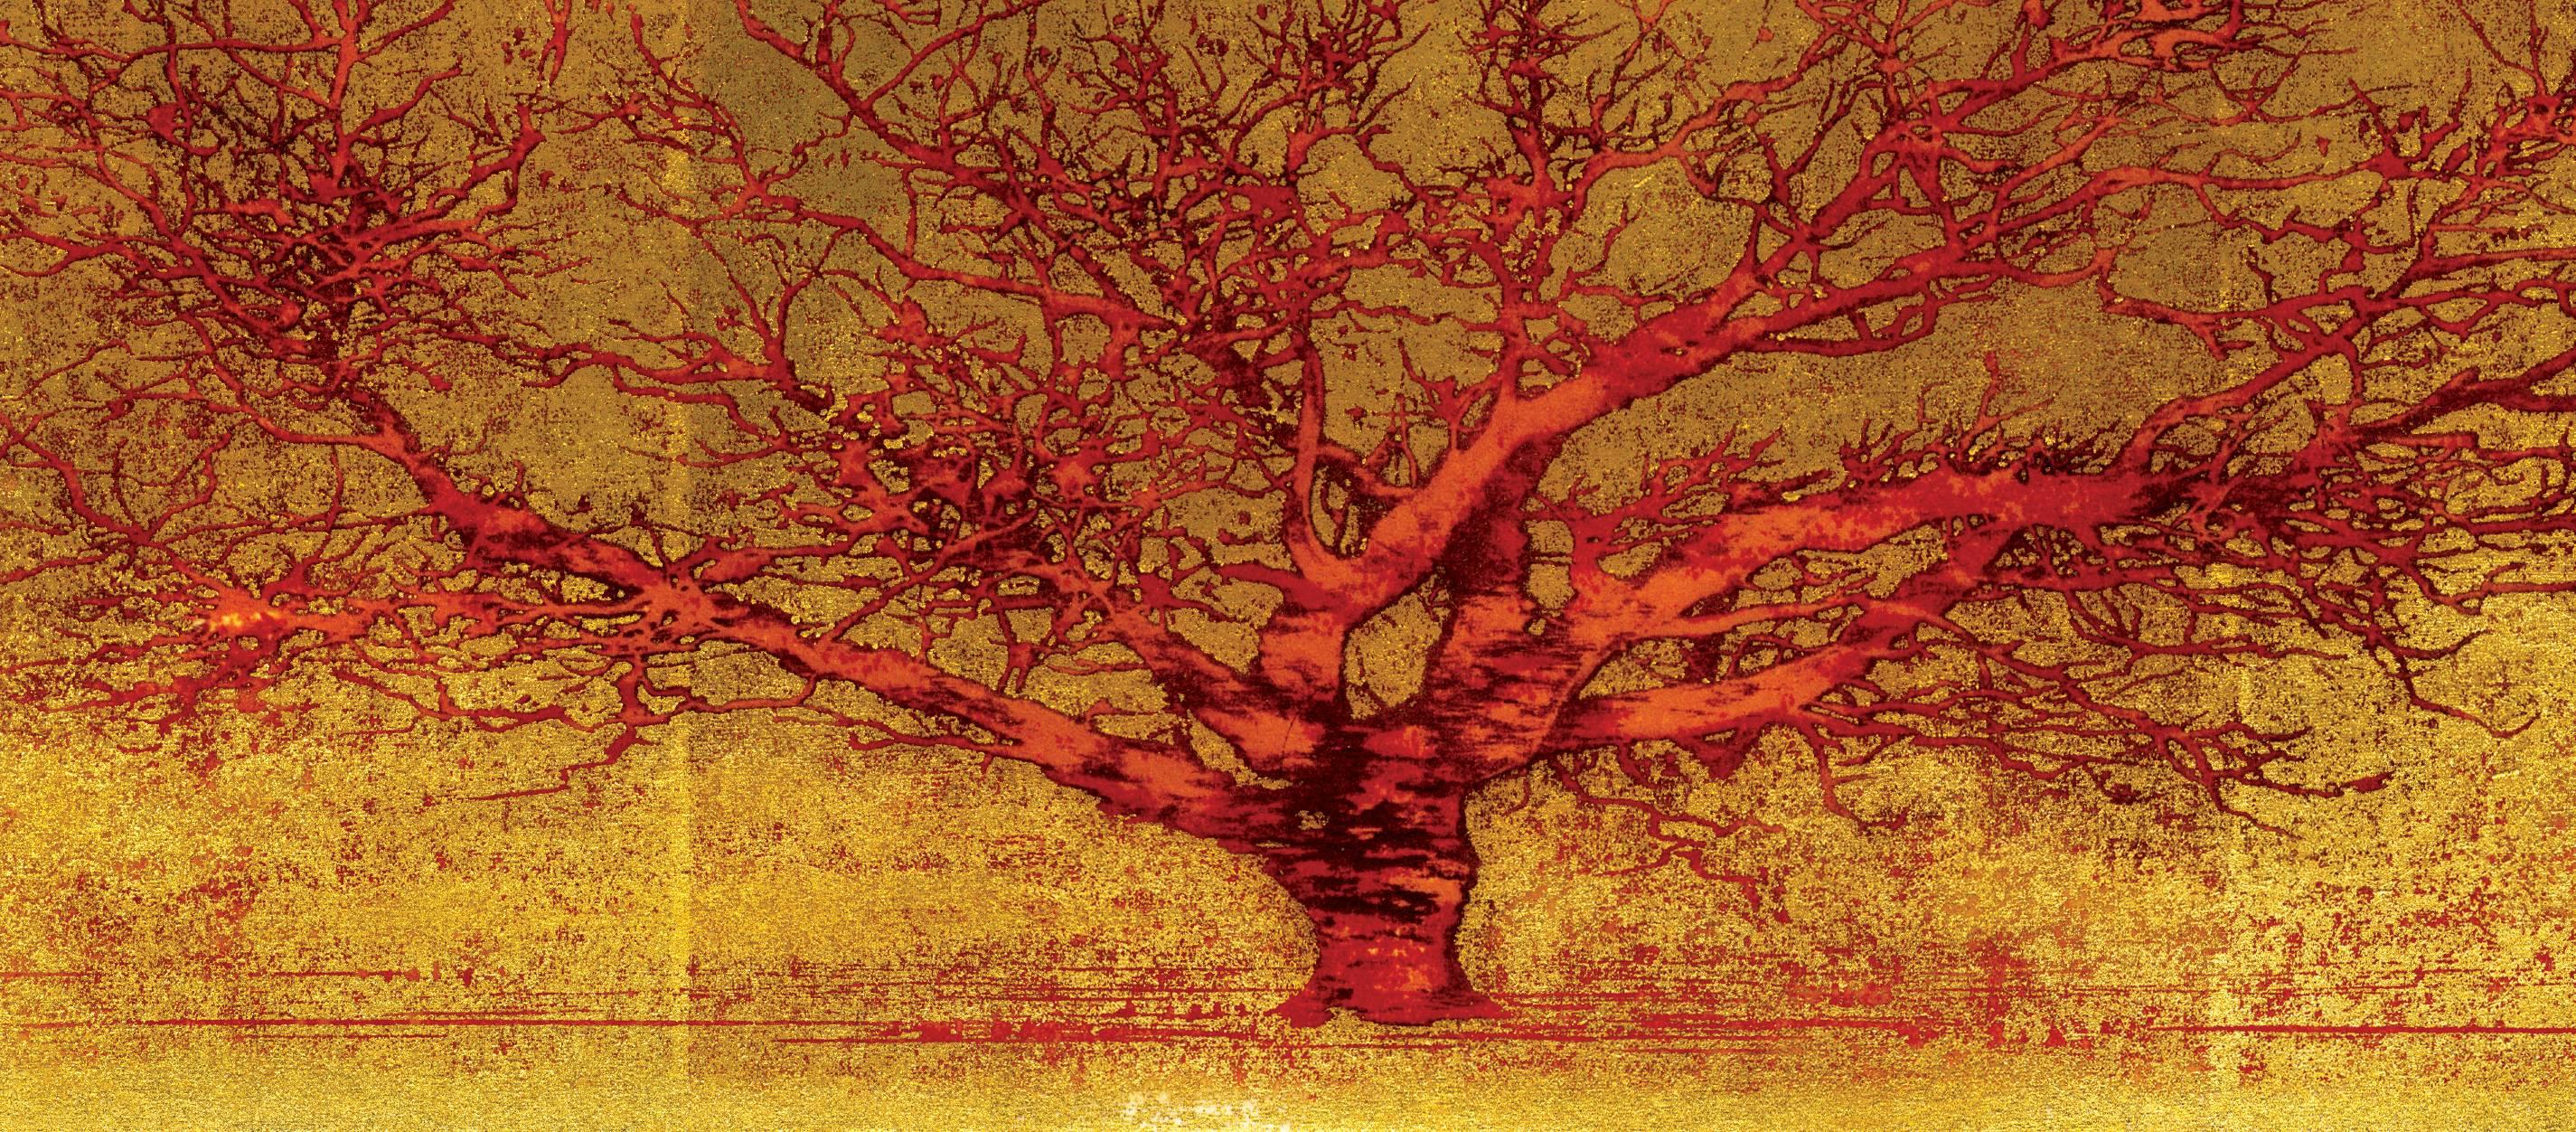 One Tree (Gold) - Print by Joichi Hoshi